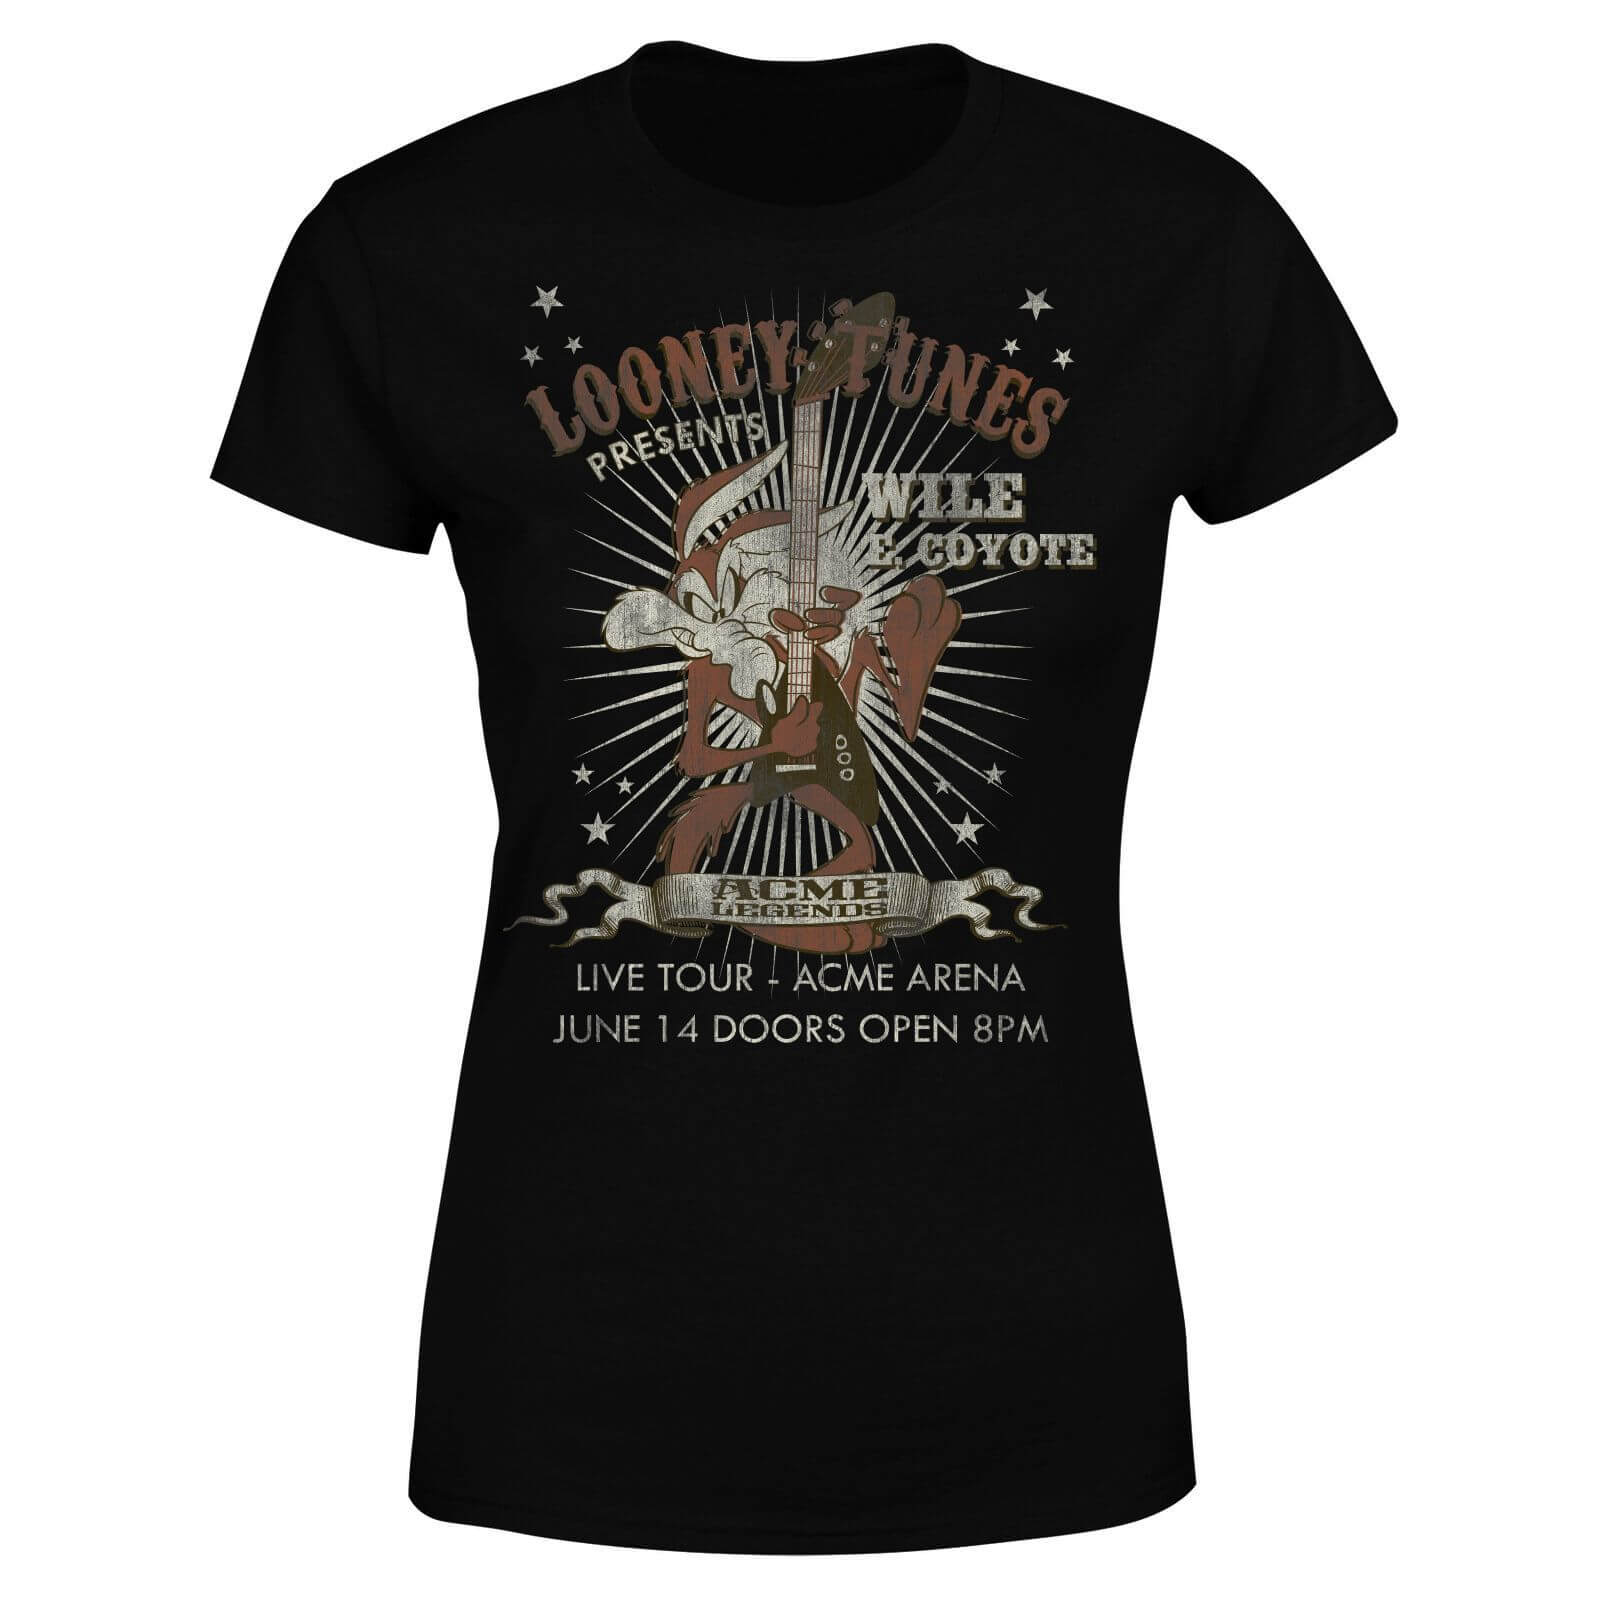 Looney Tunes Wile E Coyote Guitar Arena Tour Women's T-Shirt - Black - 4XL - Black